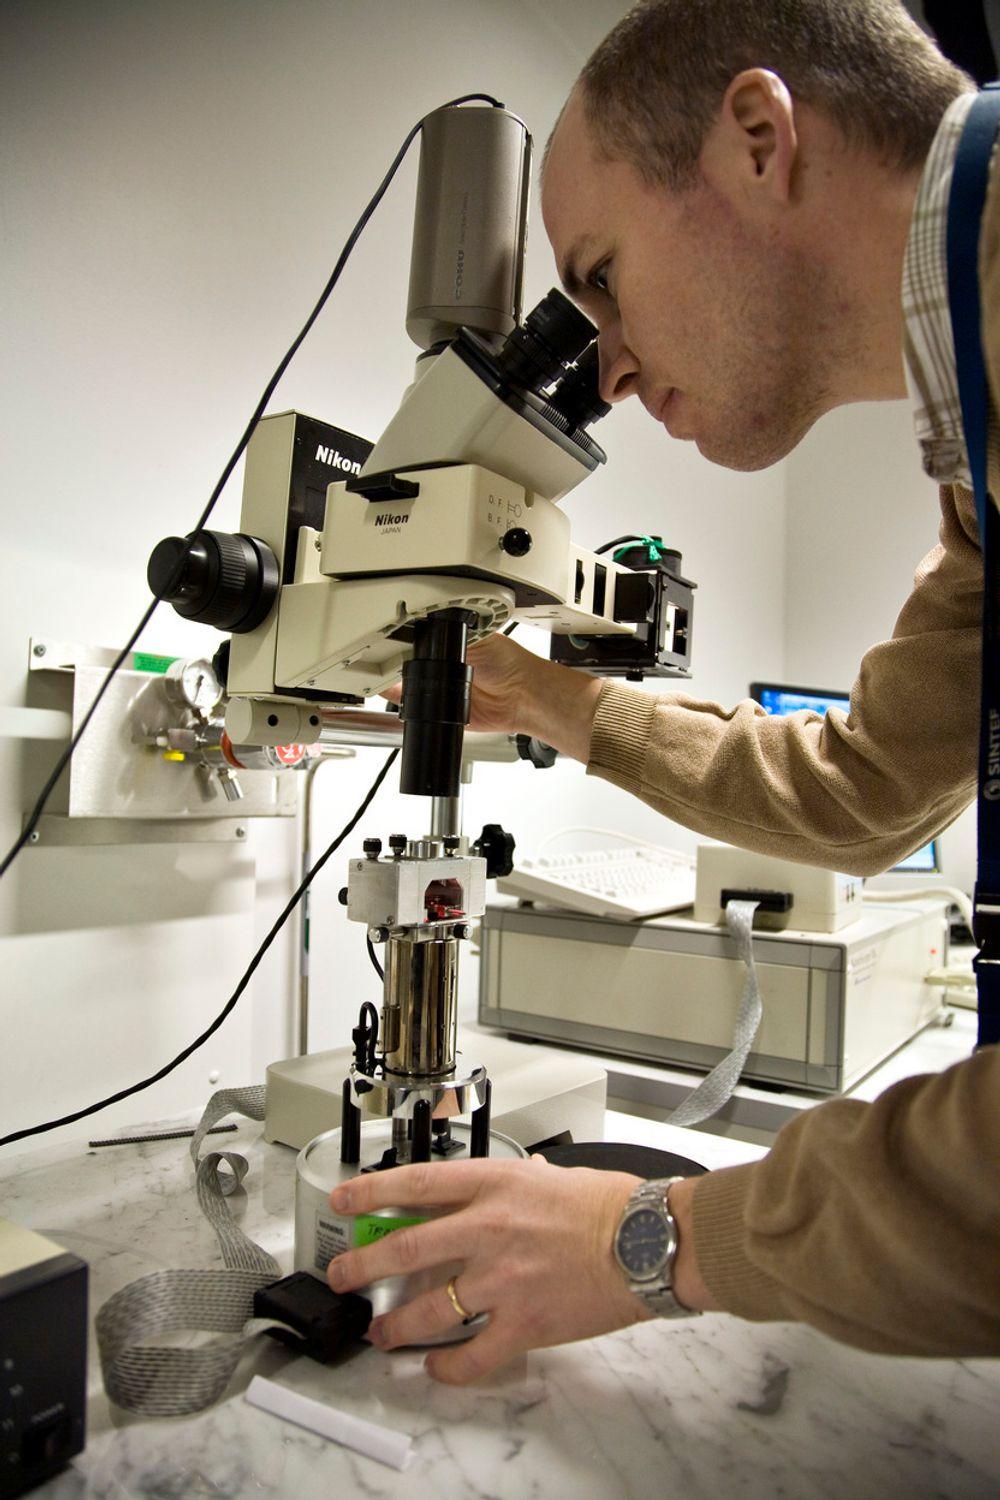 Nå får SINTEF-forsker Bjørn Steinar Tanem og forskerne ned NTNU og UiO bedre utstyr. 25 millioner kroner fra Forskningsrådet skal gå til nye instrumenter.